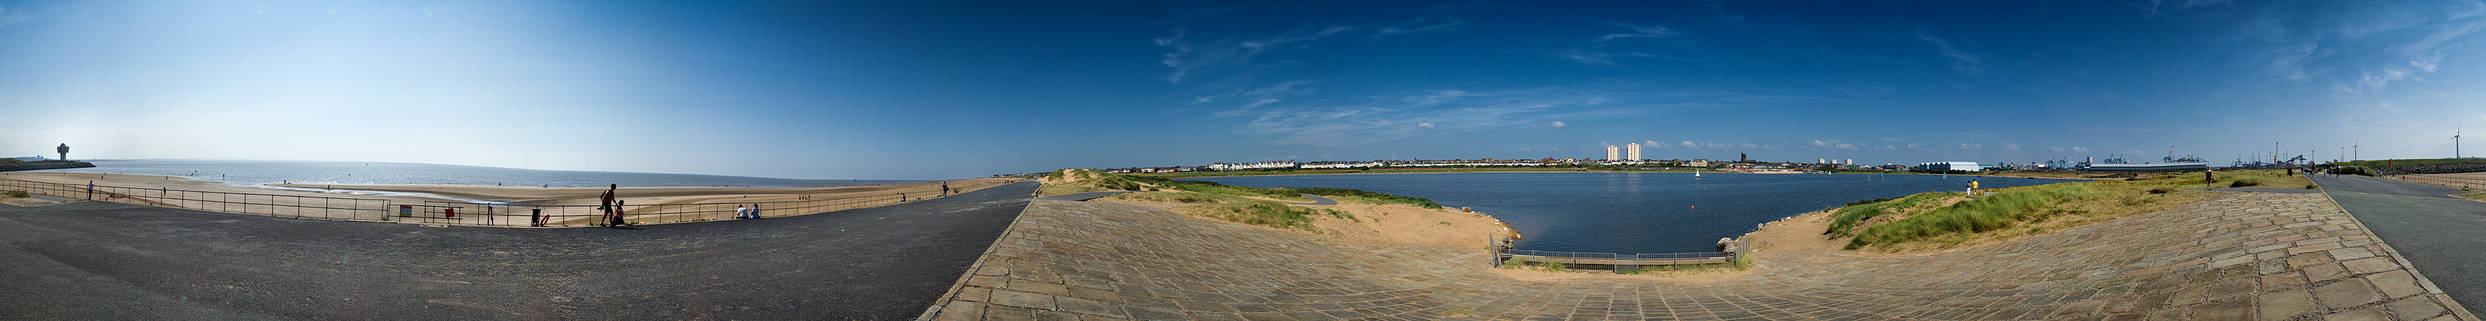 Crosby Beach Panorama